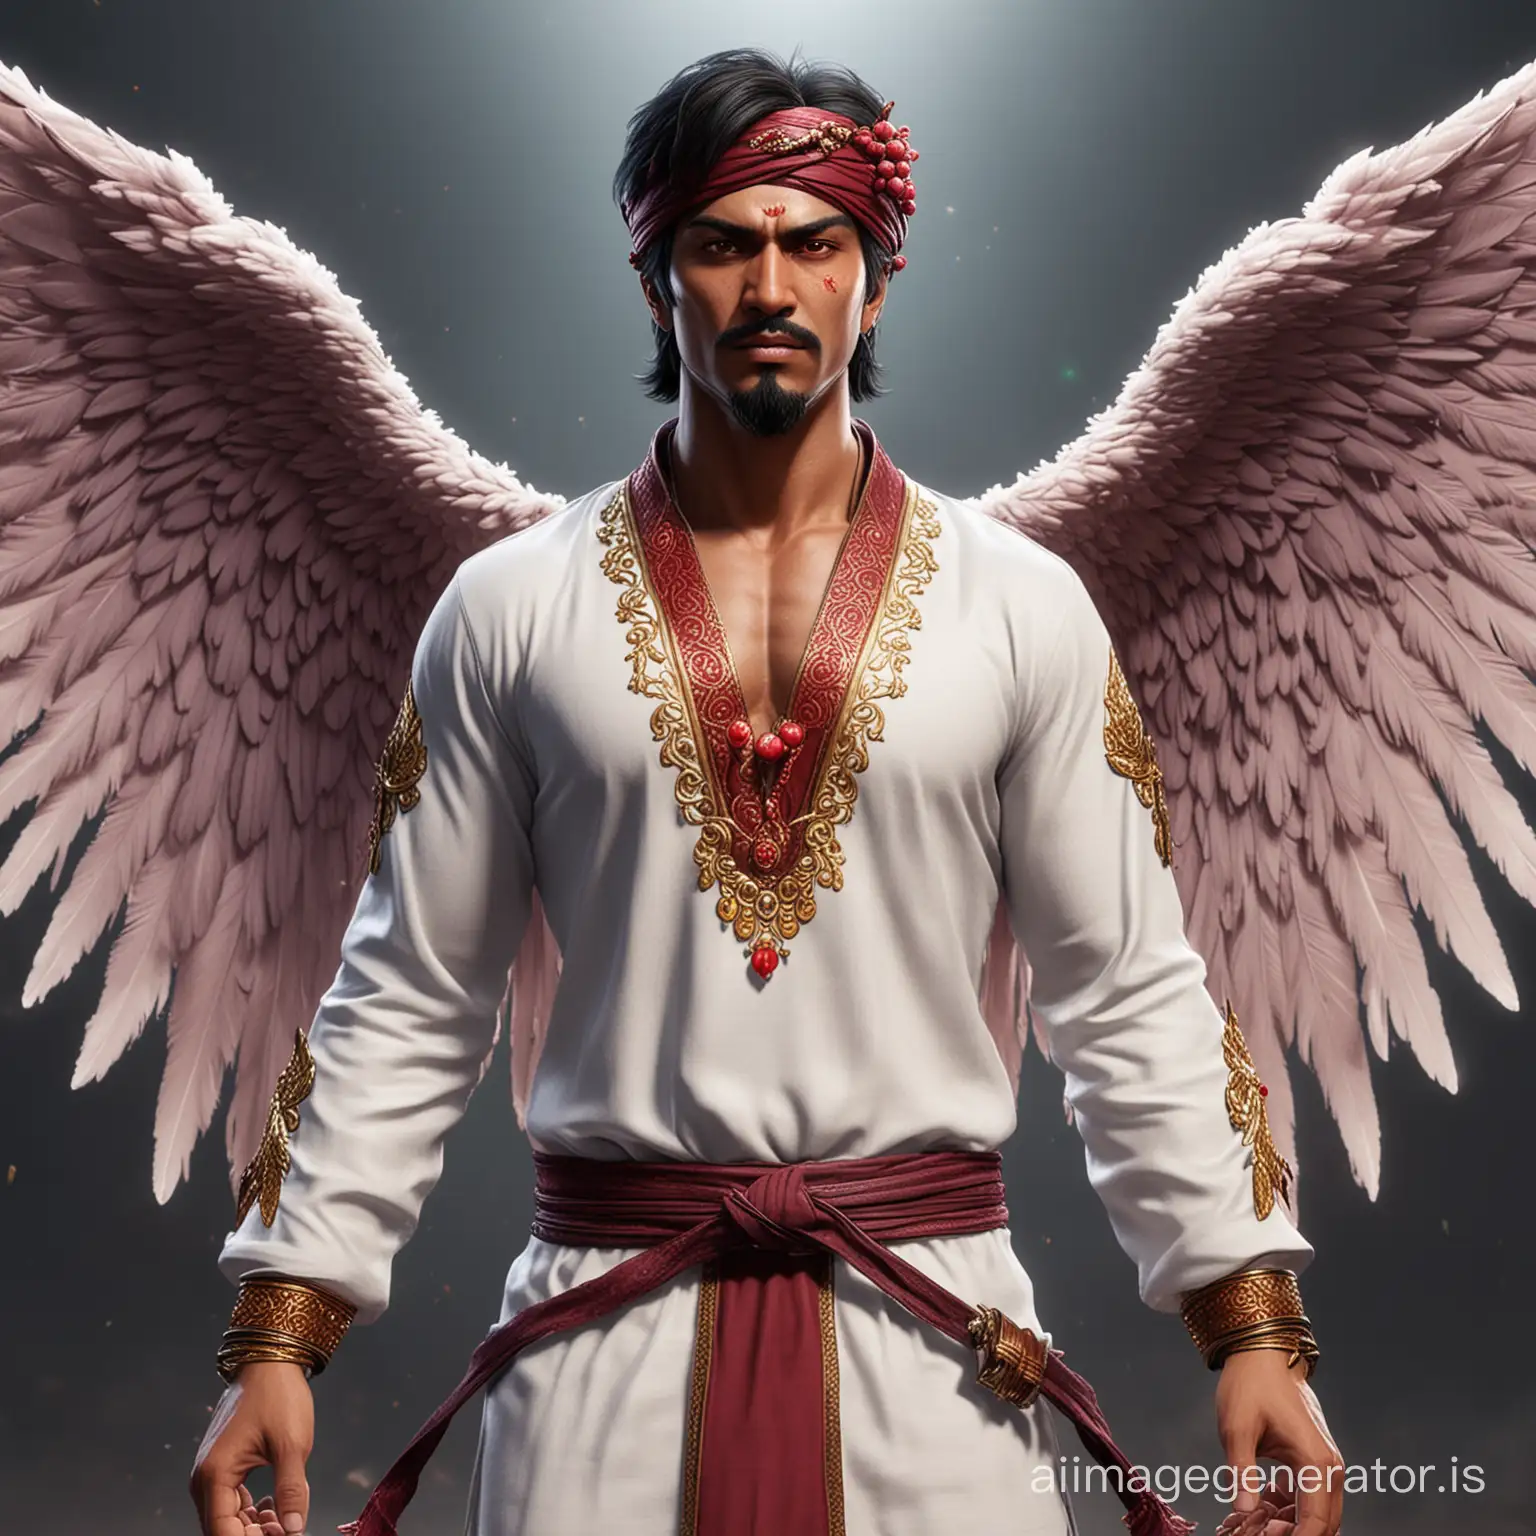 Modern-Tekken-Game-Design-Pakhar-Dev-Sing-with-Devil-Jin-Wings-and-Pomegranate-Light-Eyes